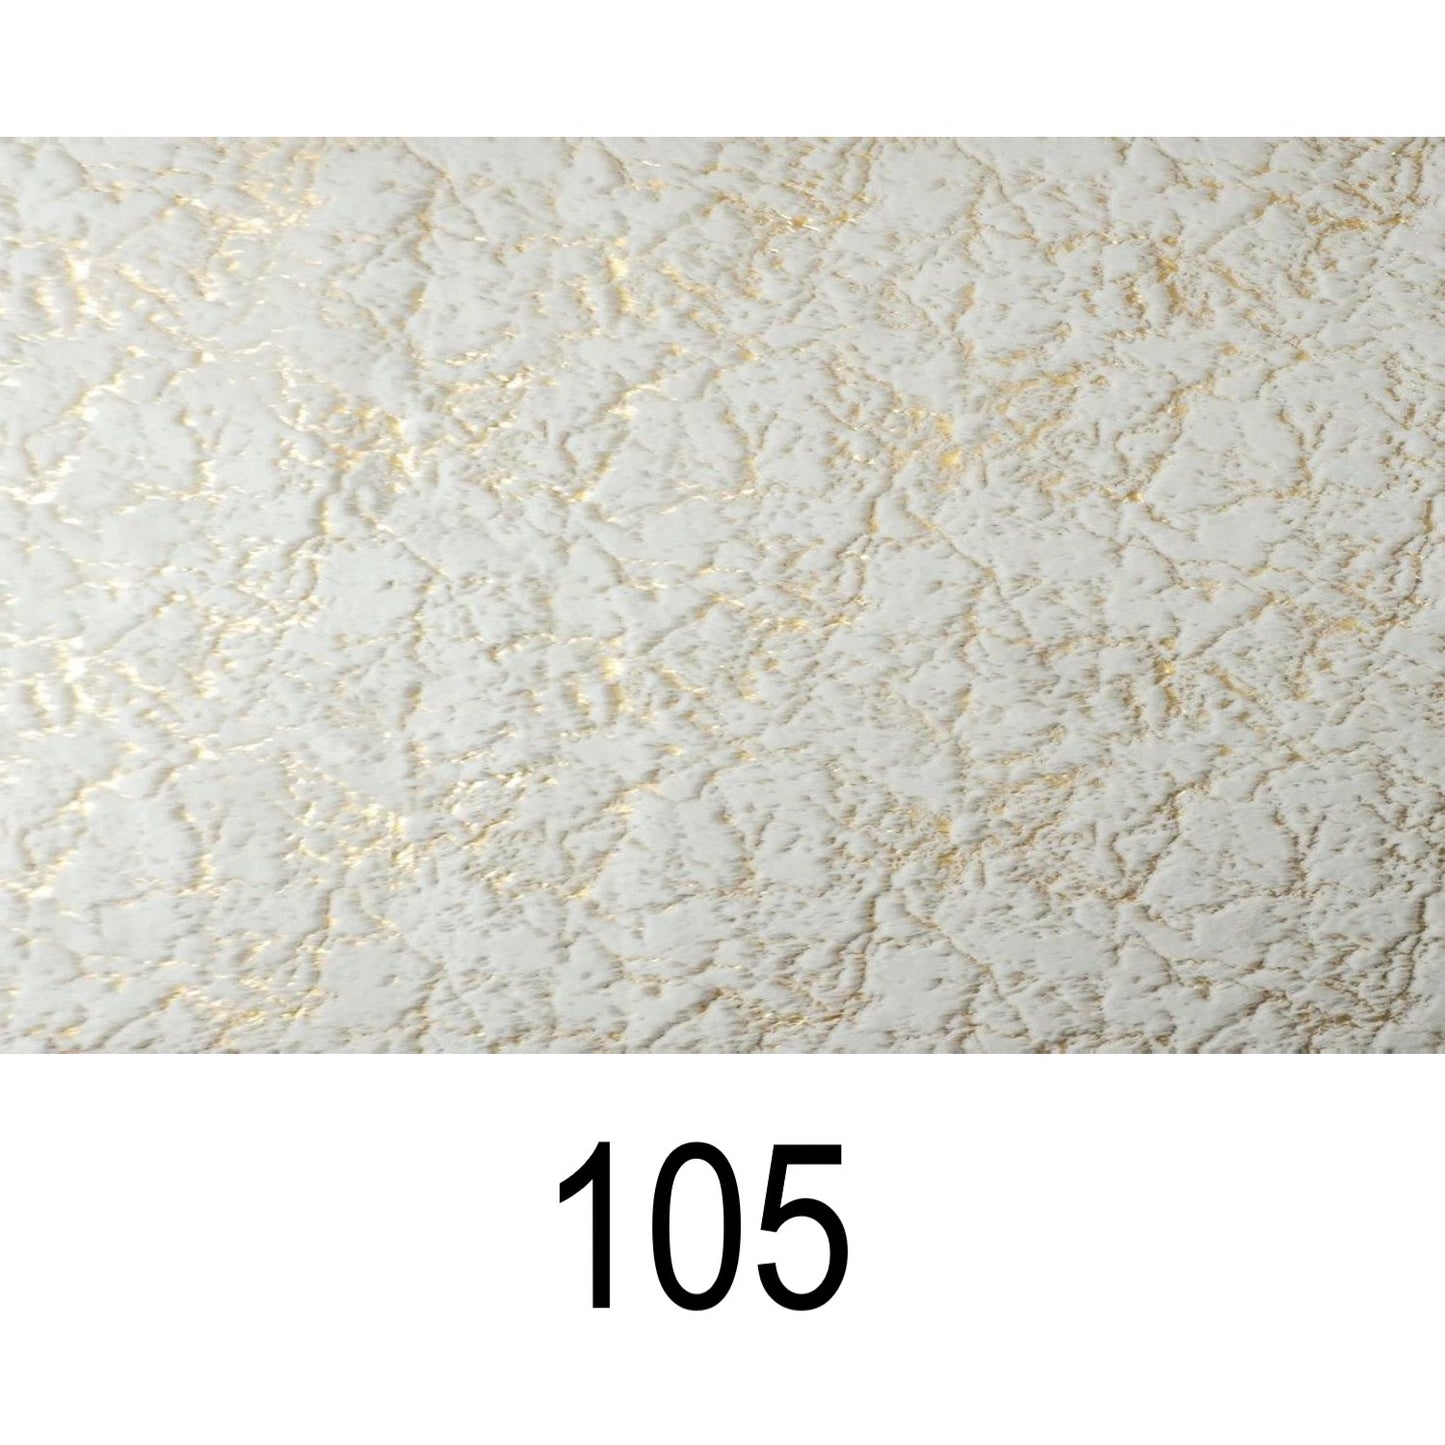 White Gold Soft Cozy Fuzzy Faux Fur Area Rug / Carpet